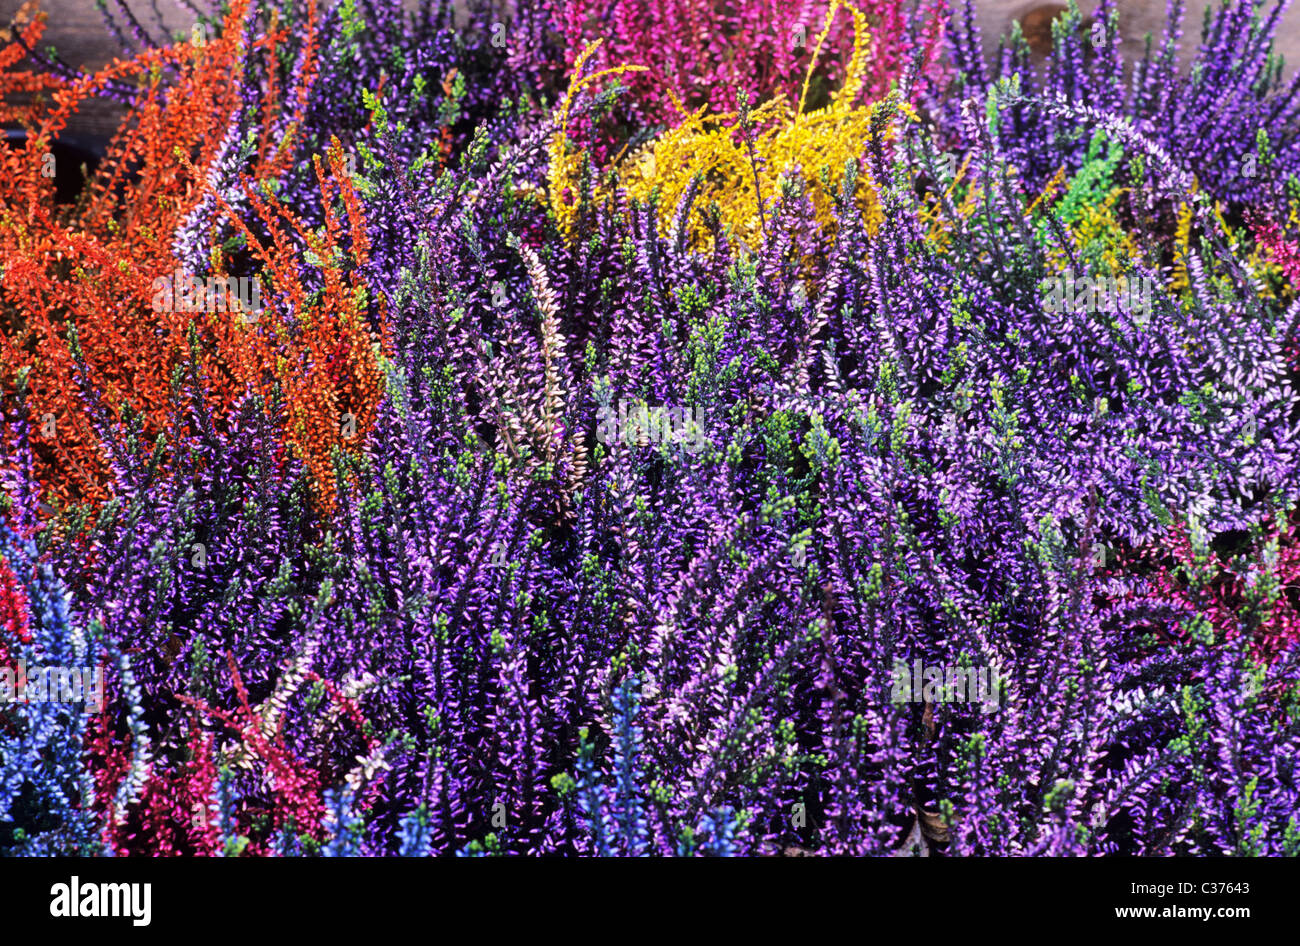 Heathers. Autumn, Winter Flowering calluna flower flowers garden plant plants heather Erica colourful colorful mixed colours Stock Photo